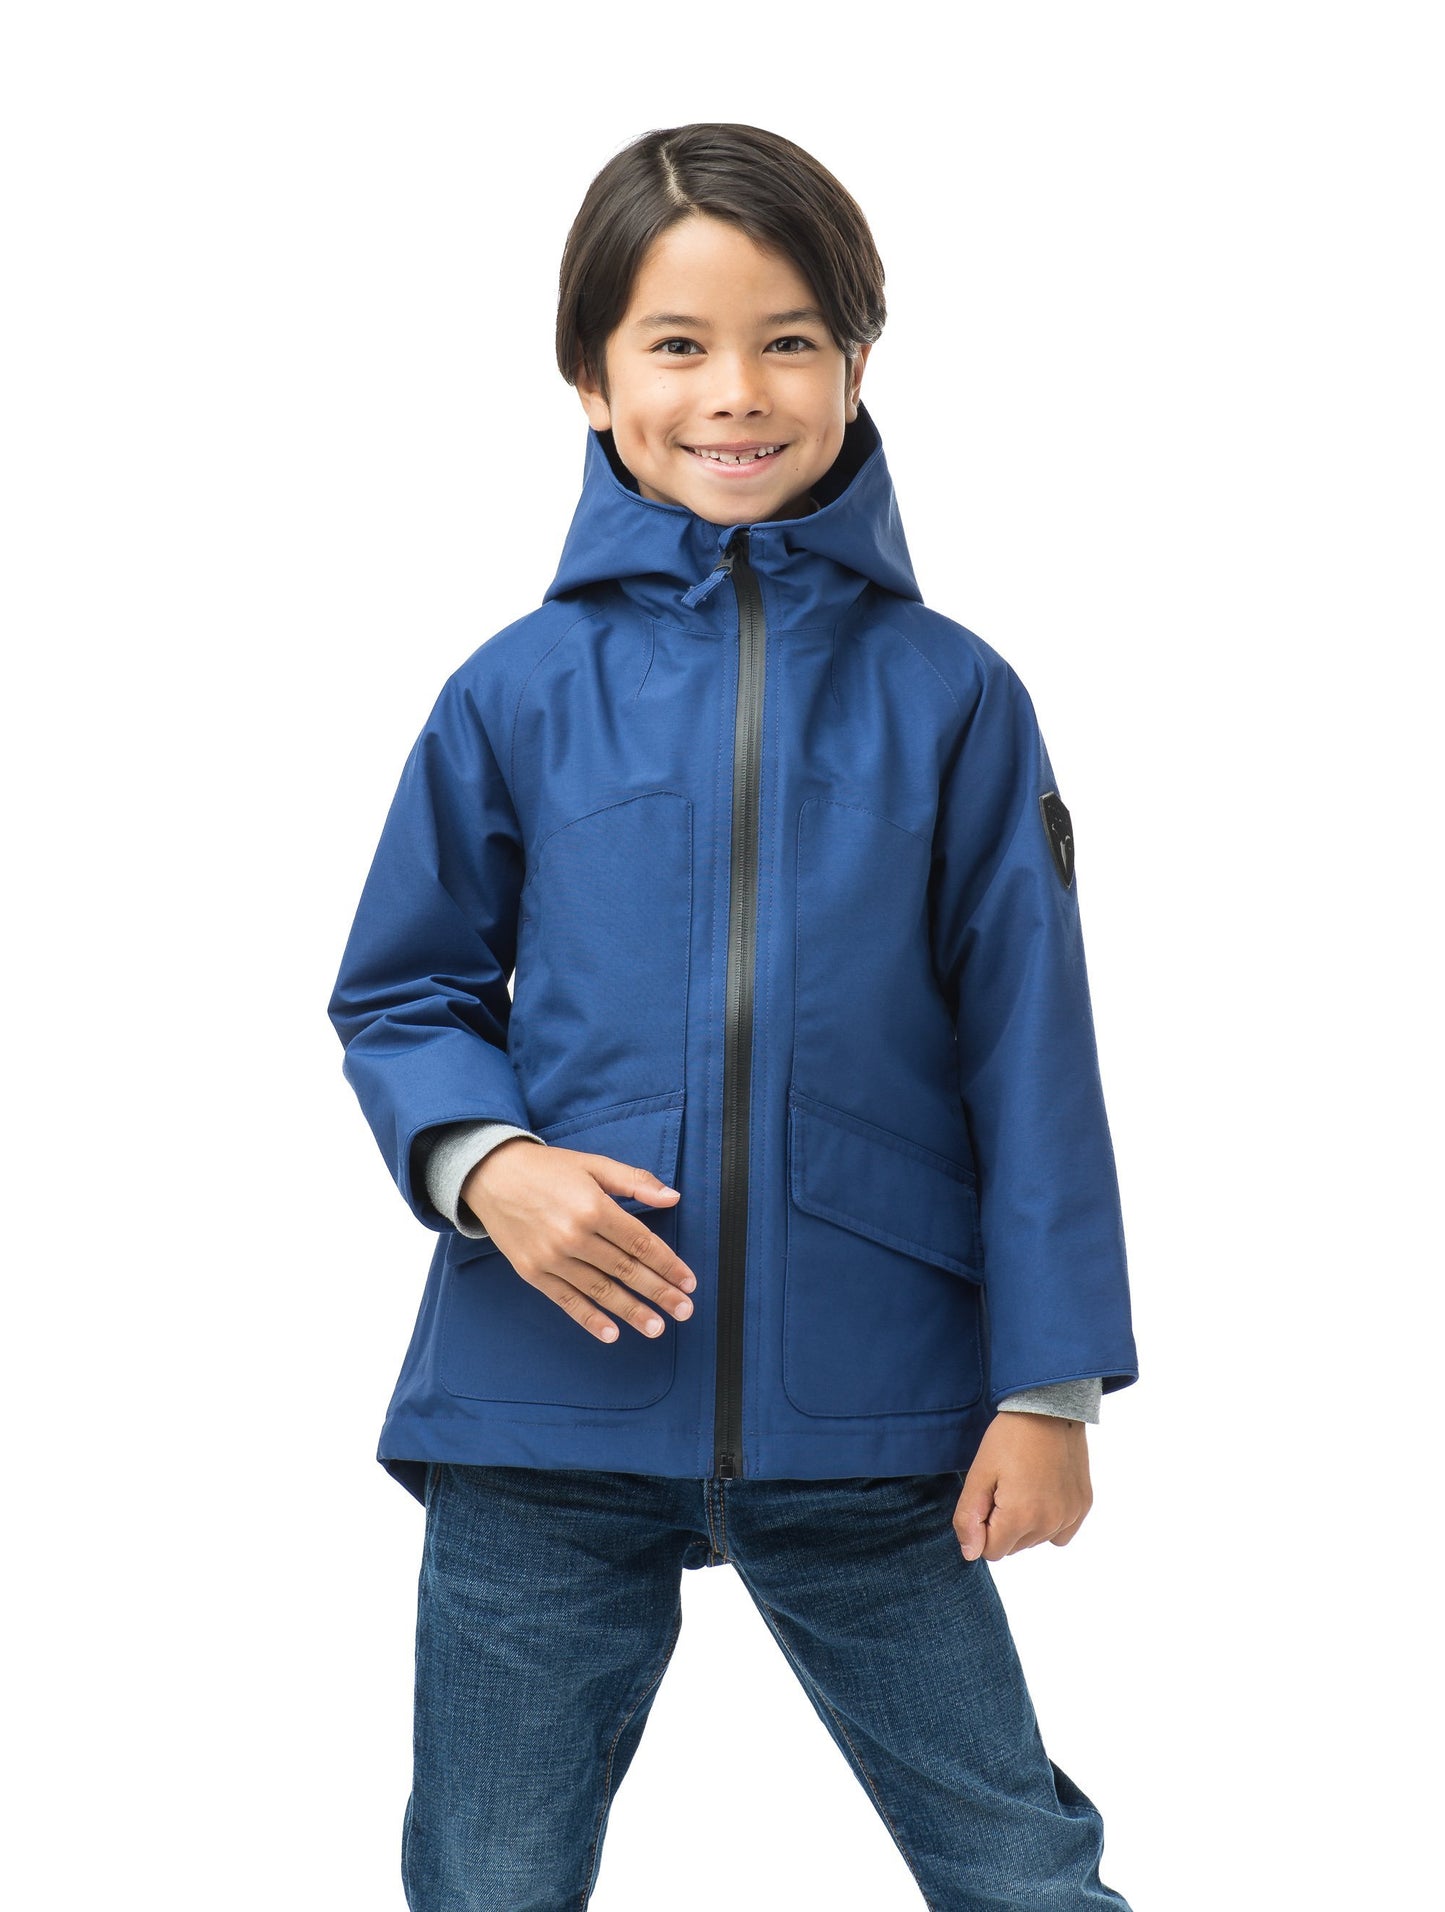 Kid's hip length fishtail rain jacket with hood in Royal